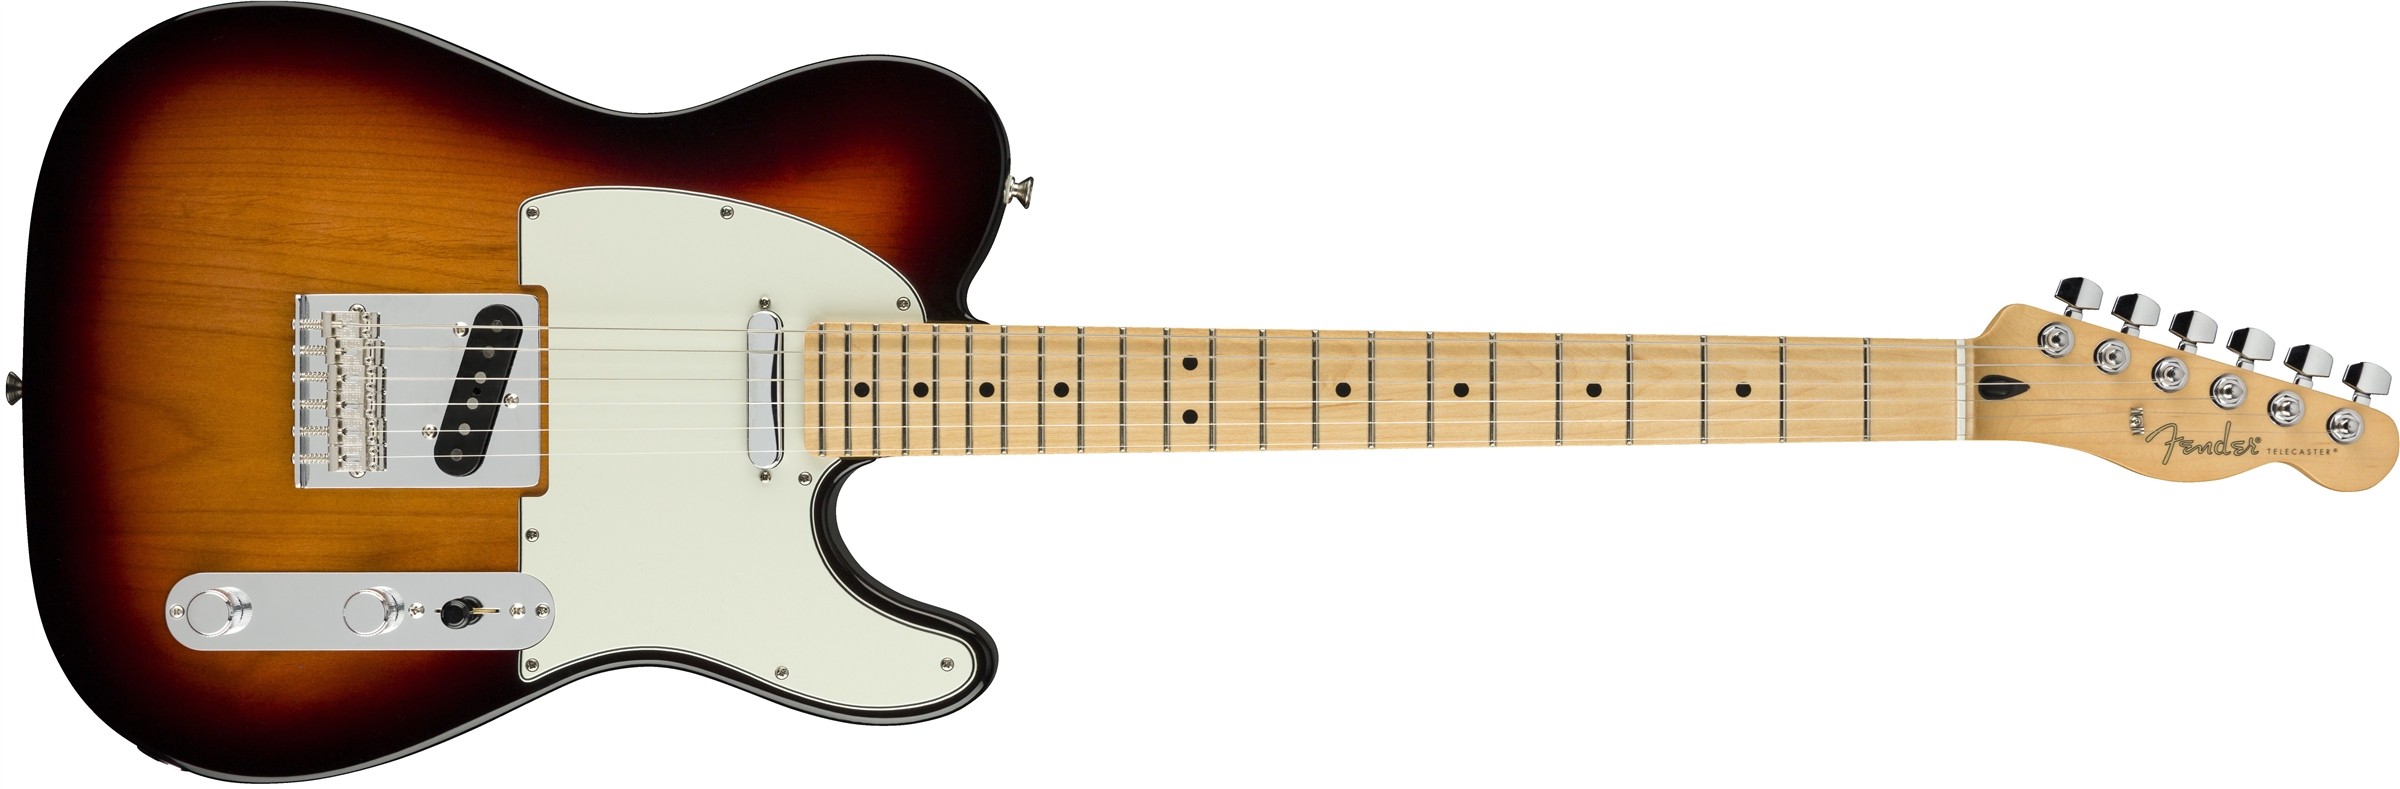 Fender Tele Player Mex Mn - 3-color Sunburst - Televorm elektrische gitaar - Variation 1